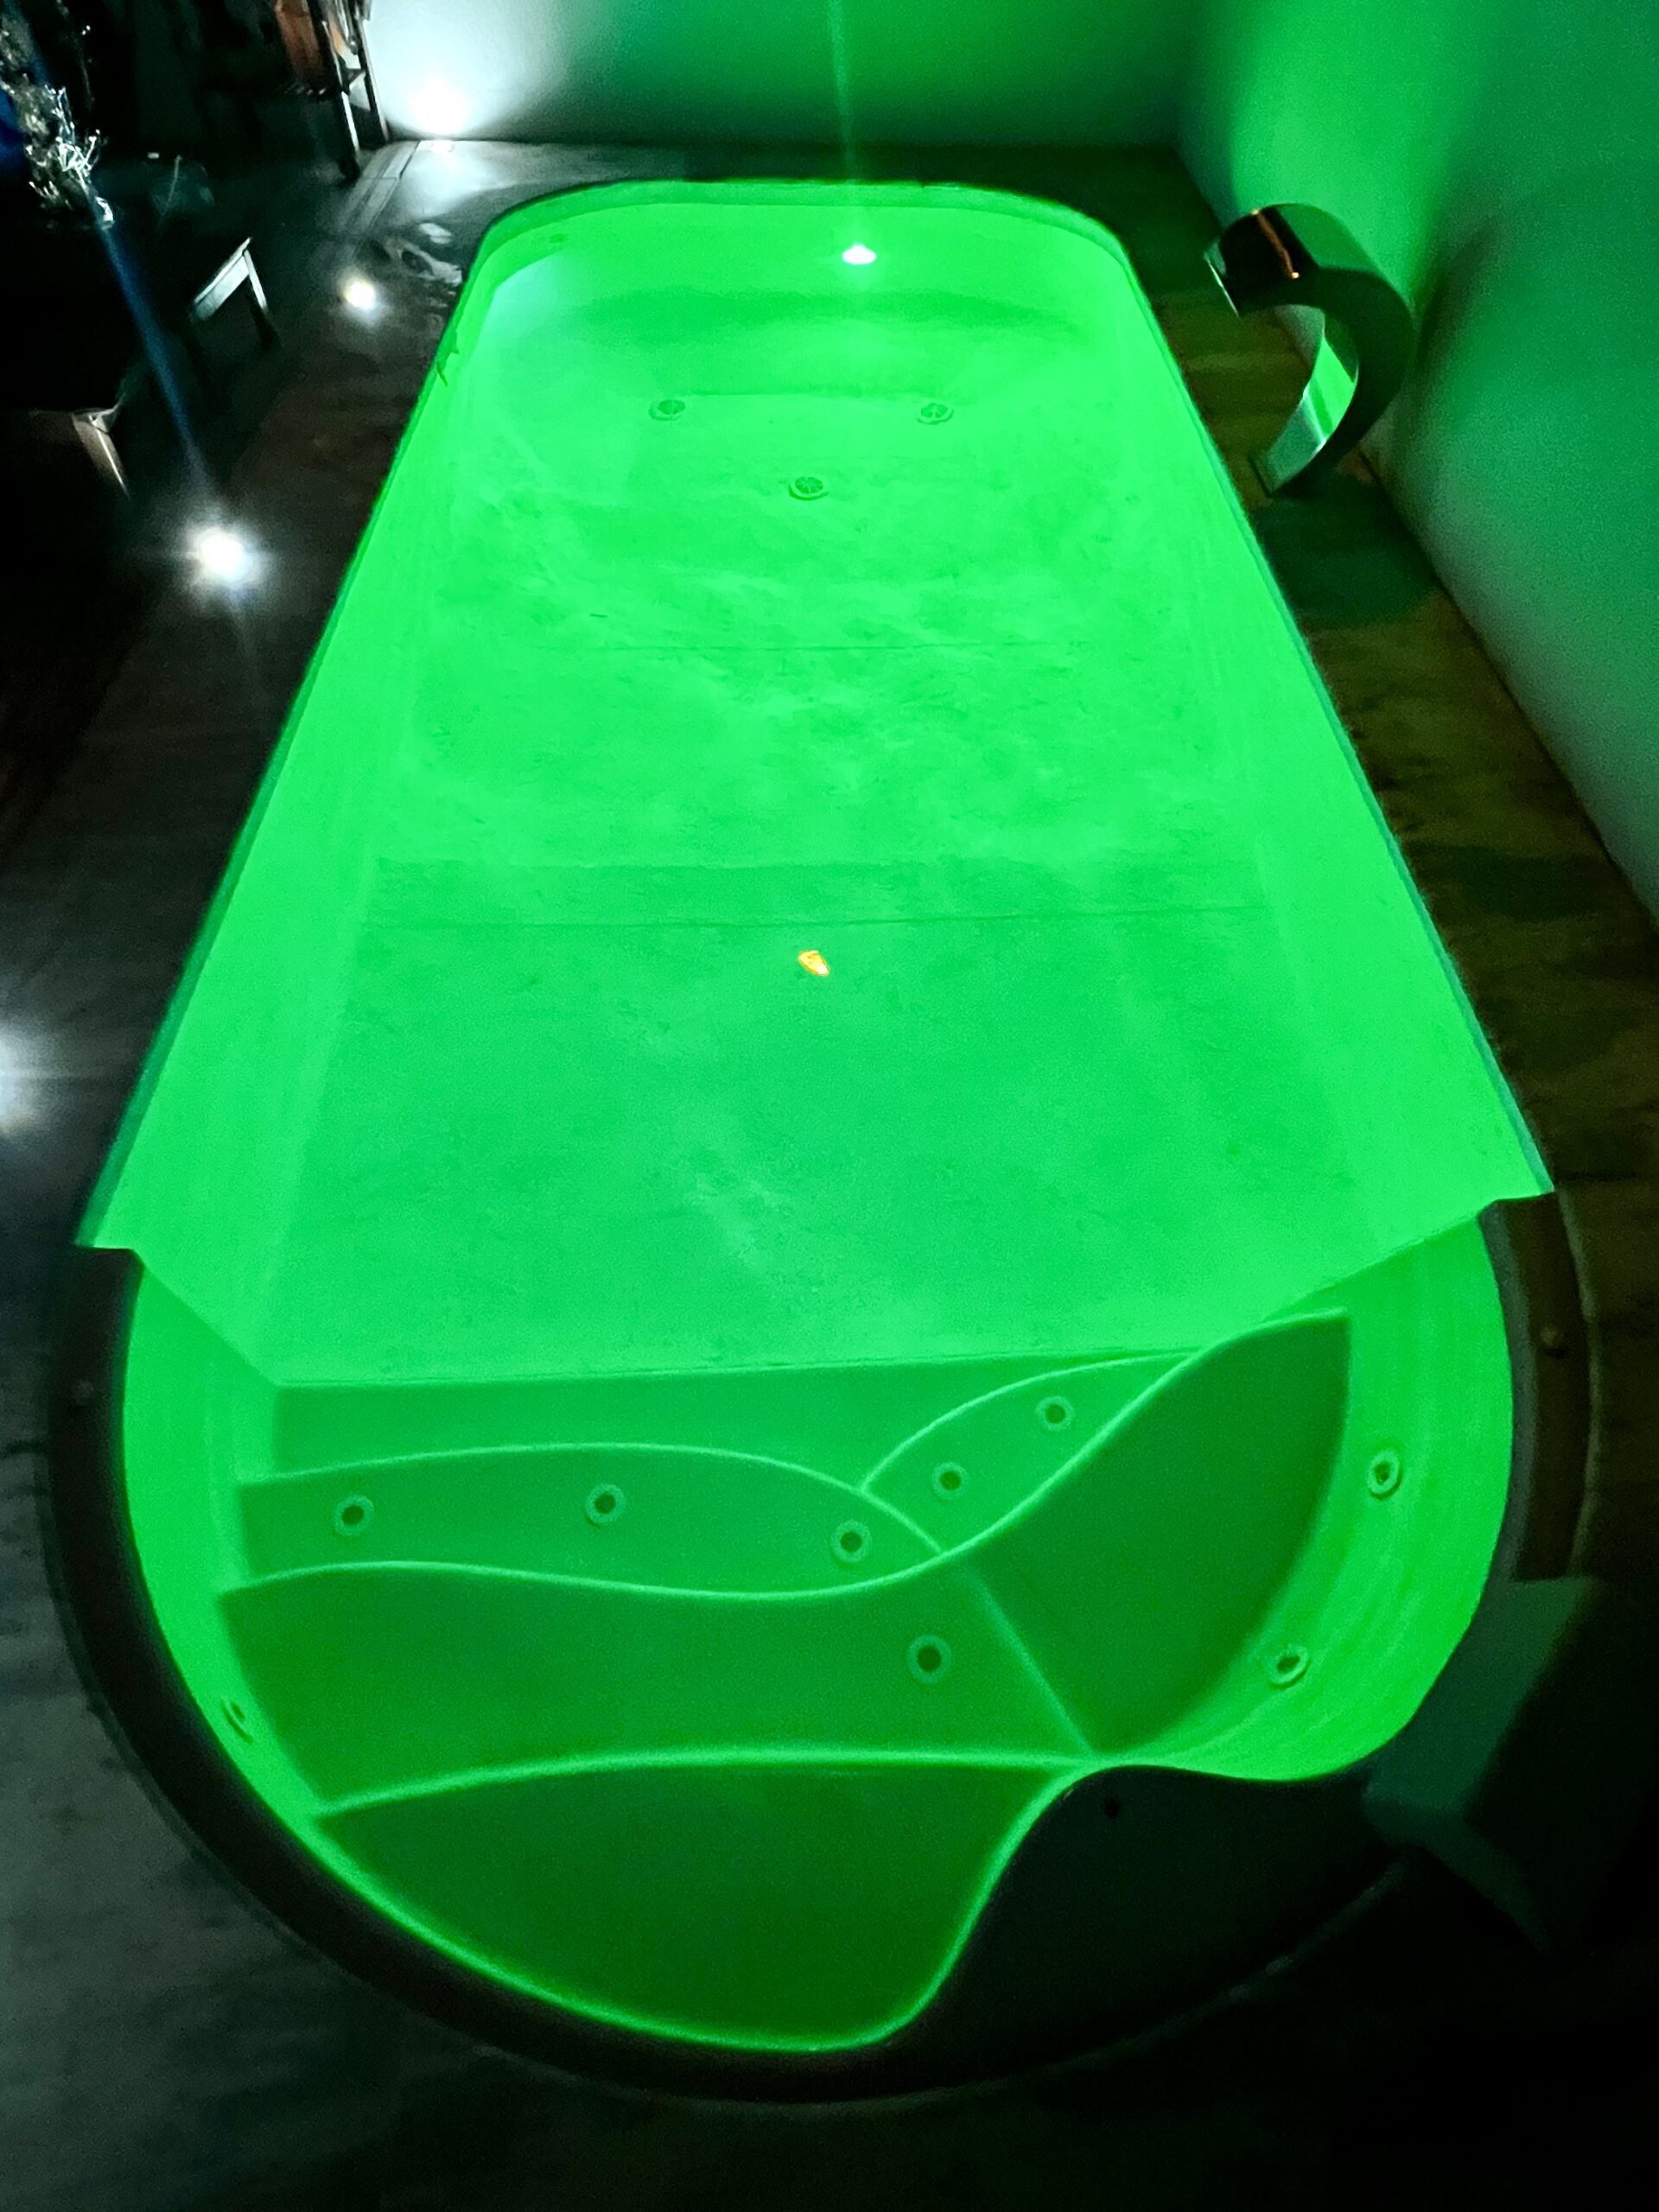 piscinas - ramos - equipamentos - iluminacao - led - rgb - green